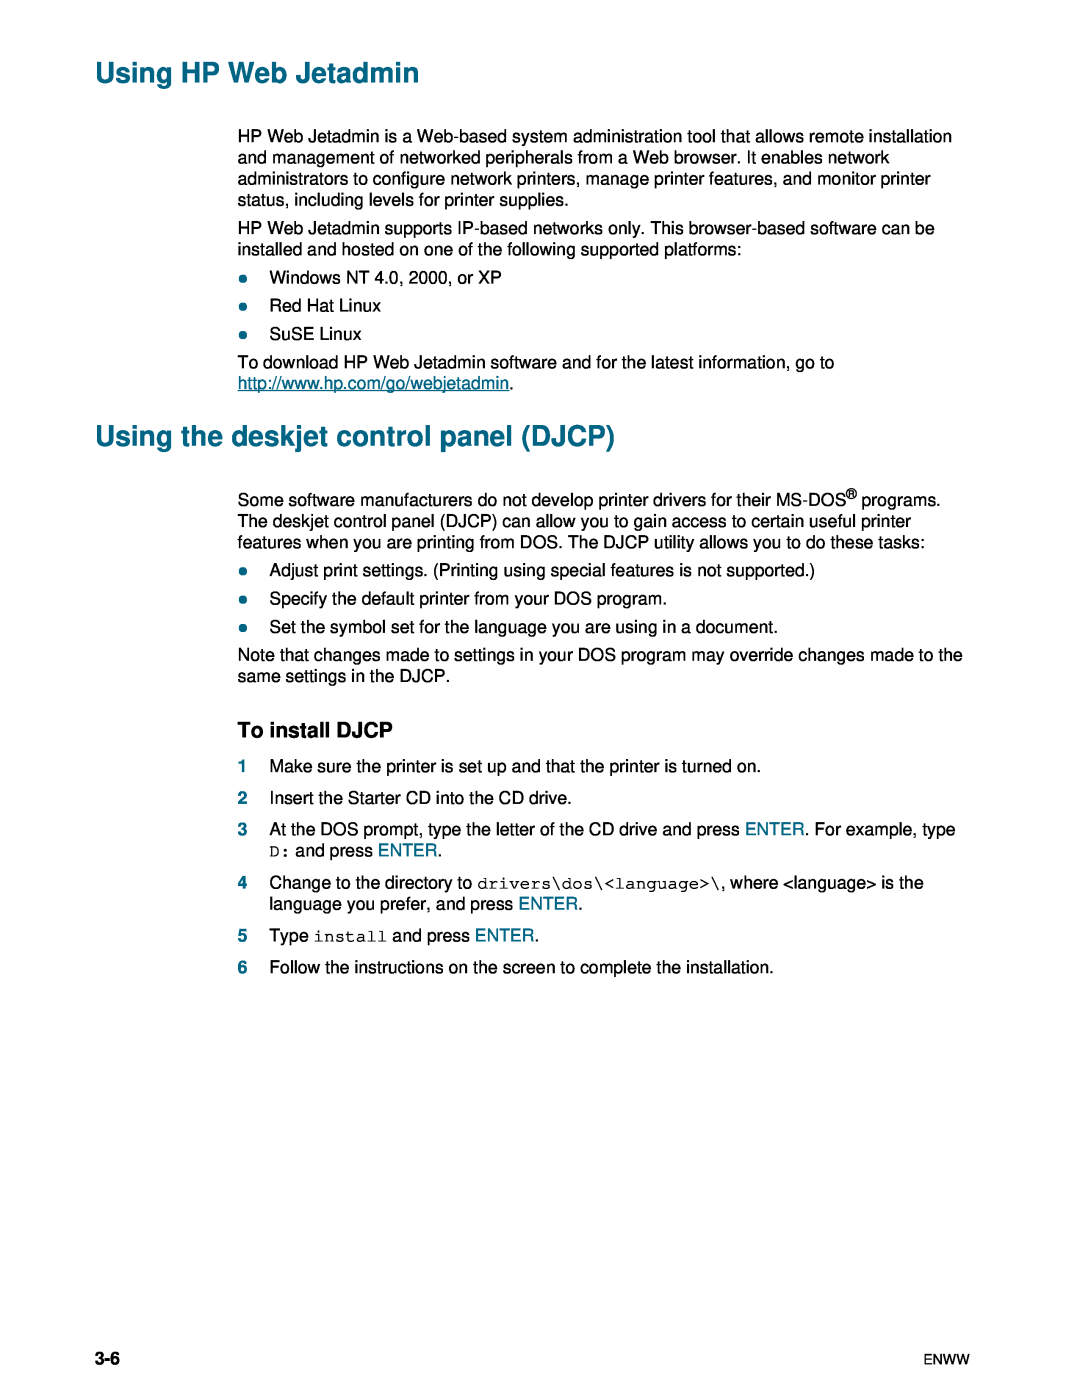 HP 1100dtn manual Using HP Web Jetadmin, Using the deskjet control panel DJCP, To install DJCP 